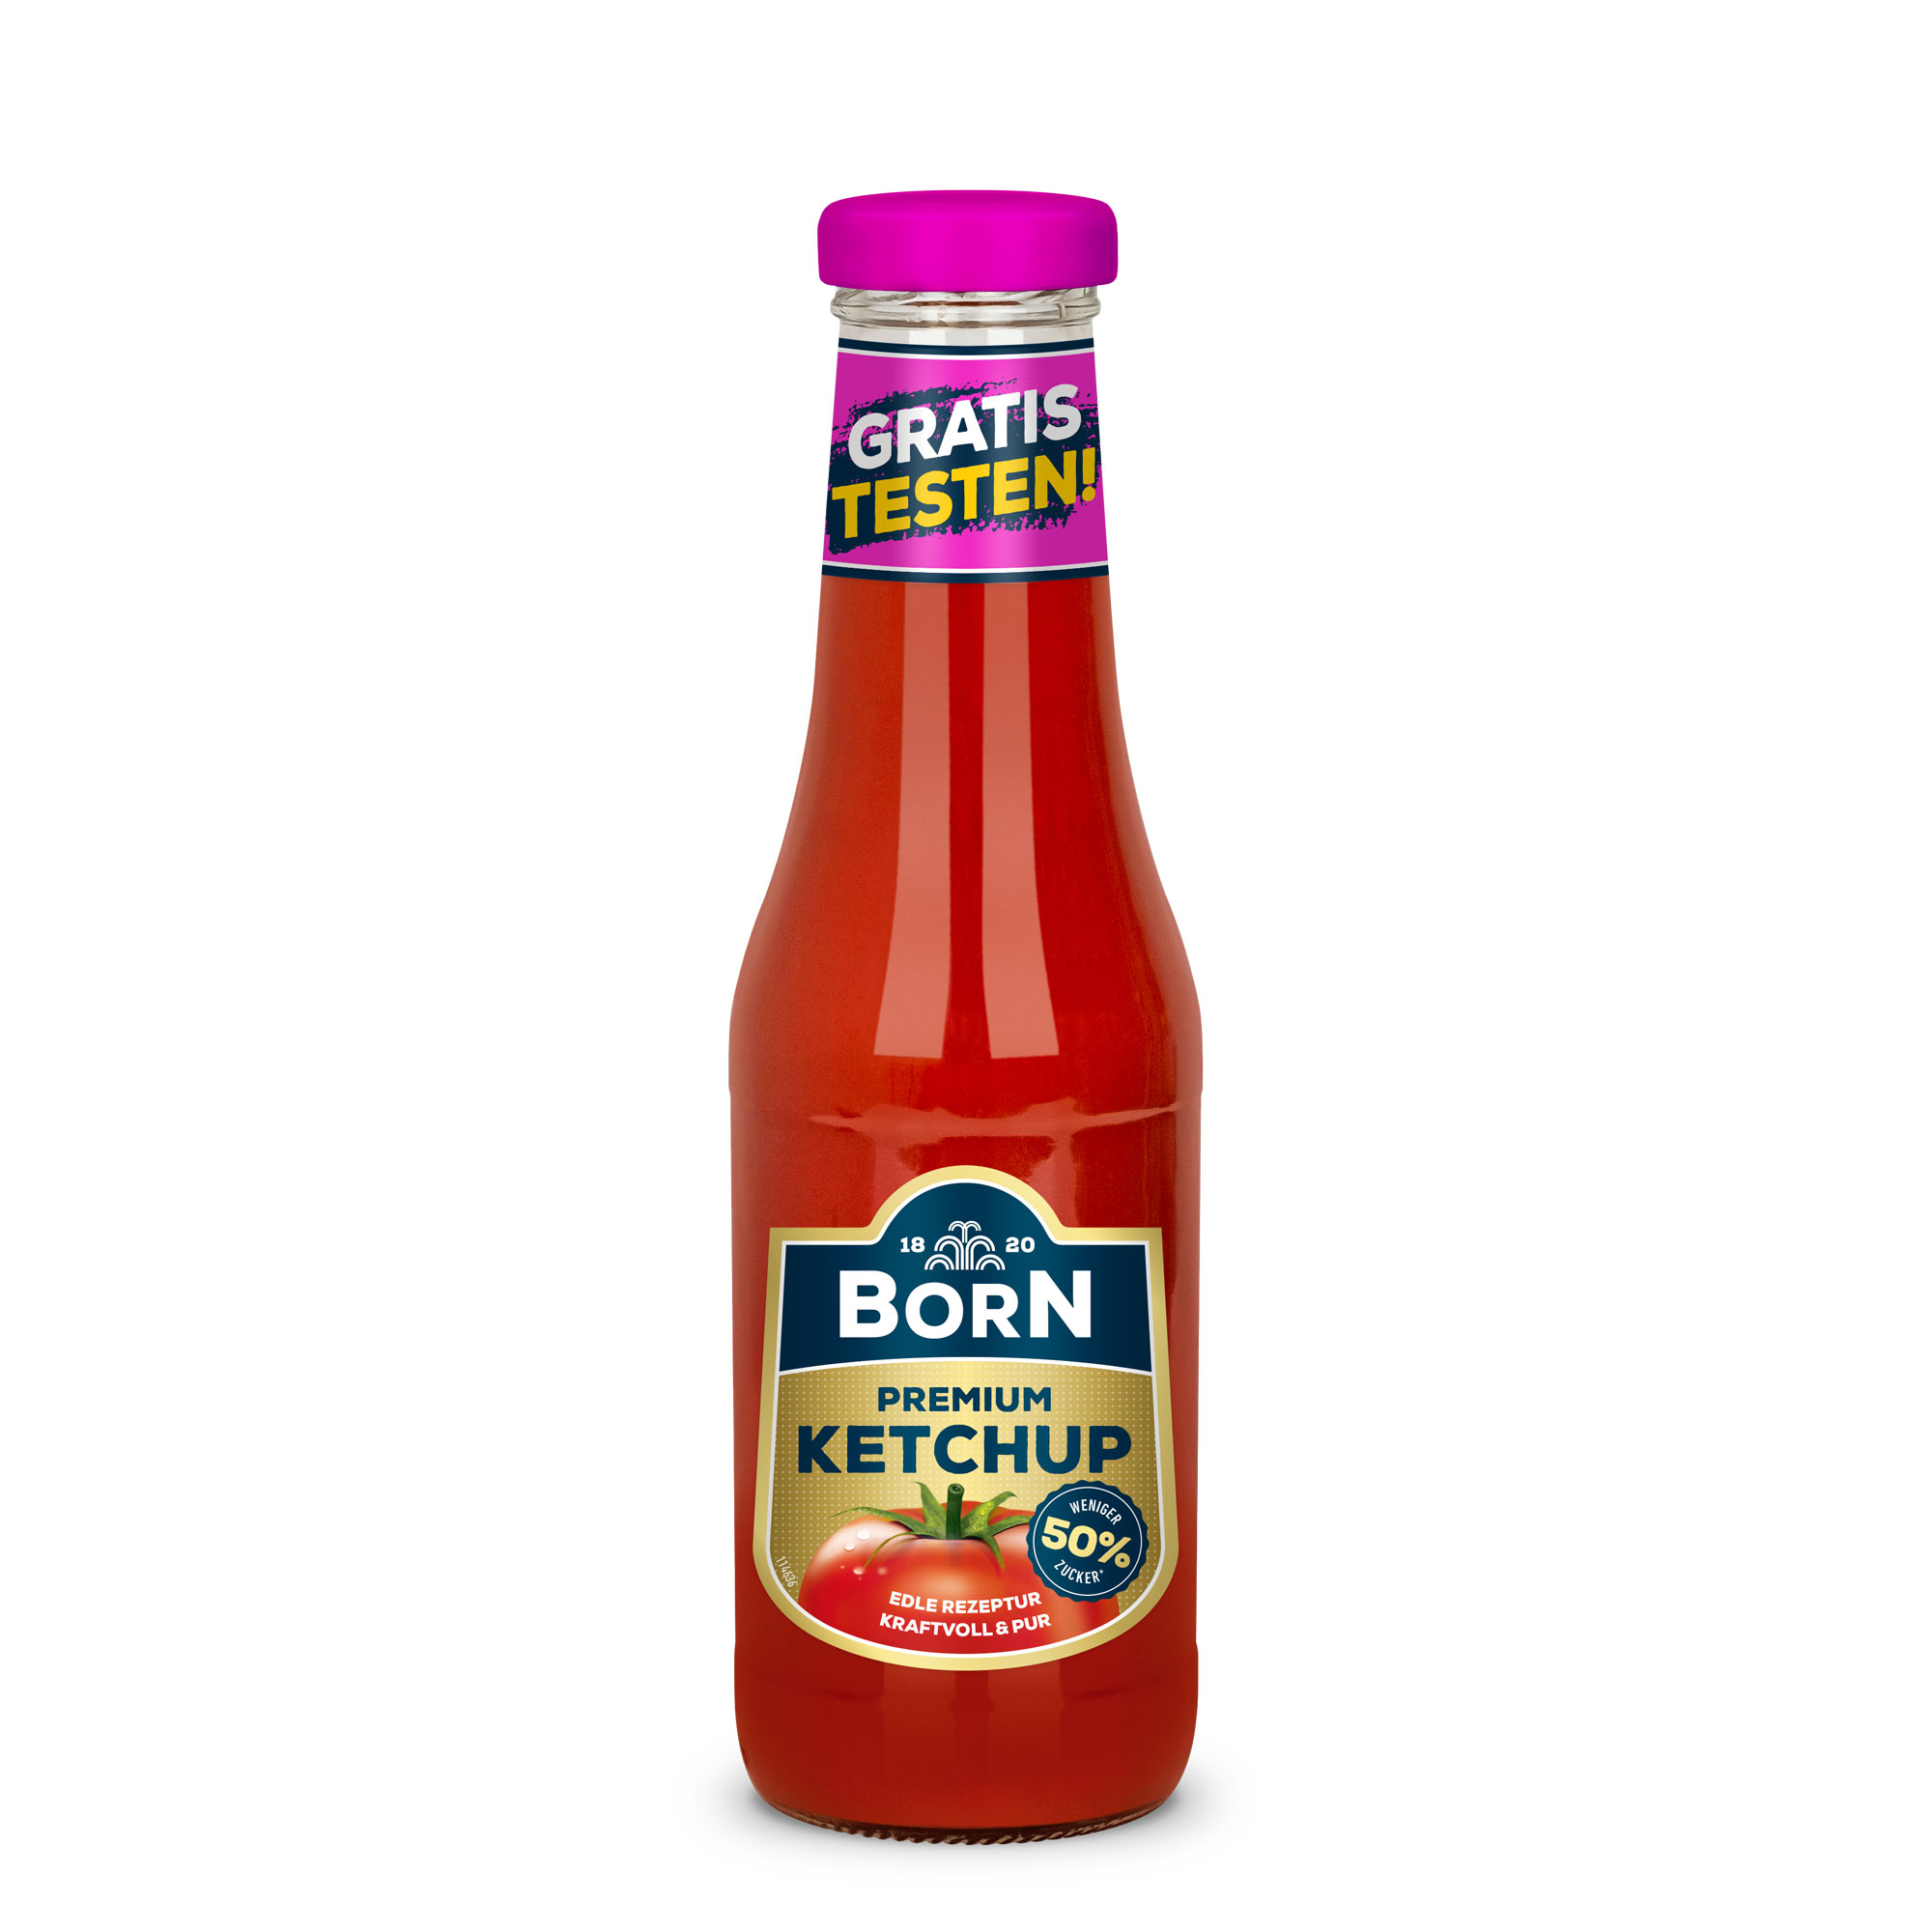 BORN Premium Tomaten-Ketchup in der 450ml. Sonderaktion Gratis testen